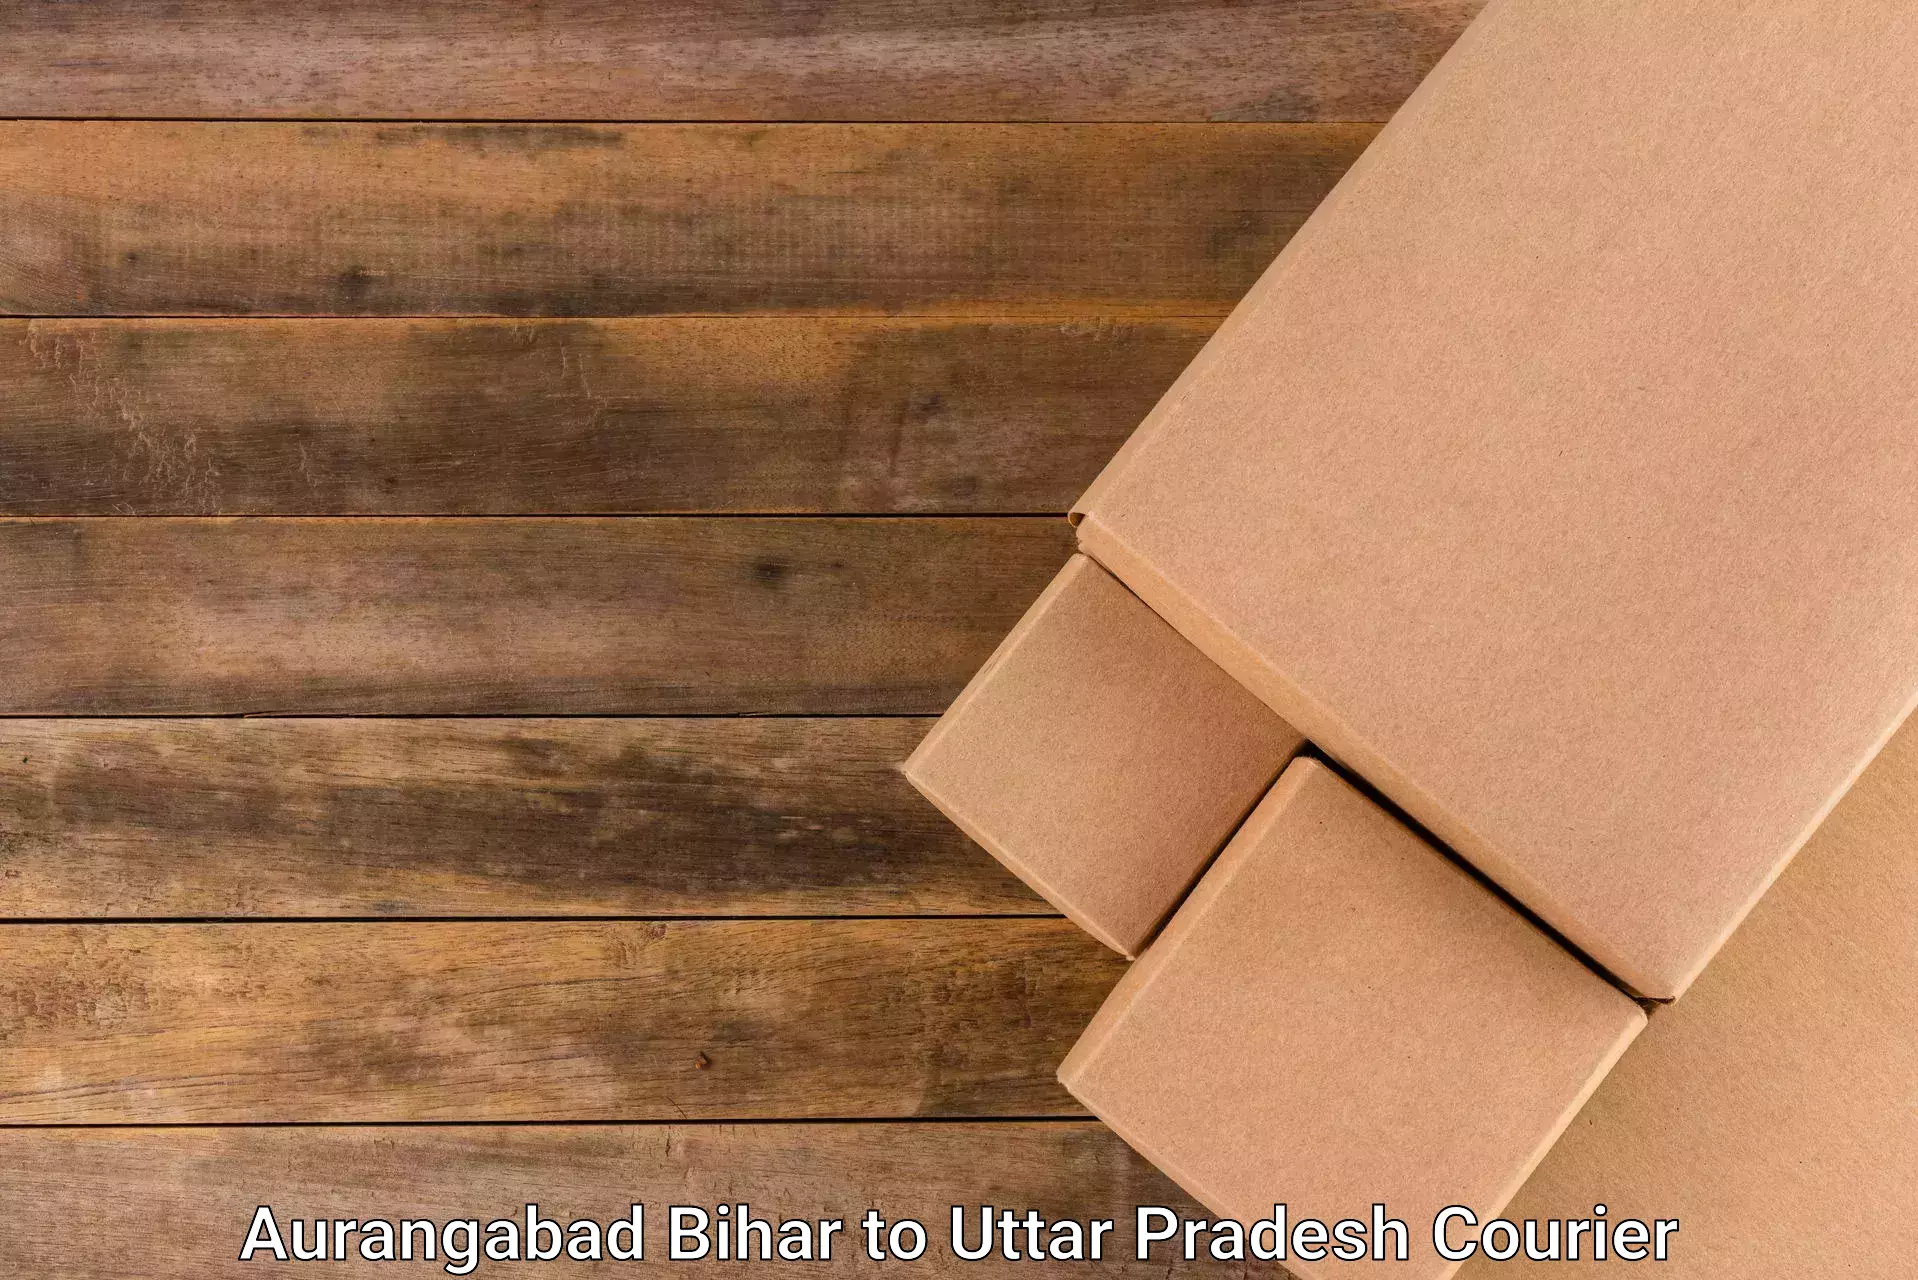 Innovative logistics solutions Aurangabad Bihar to Aligarh Muslim University